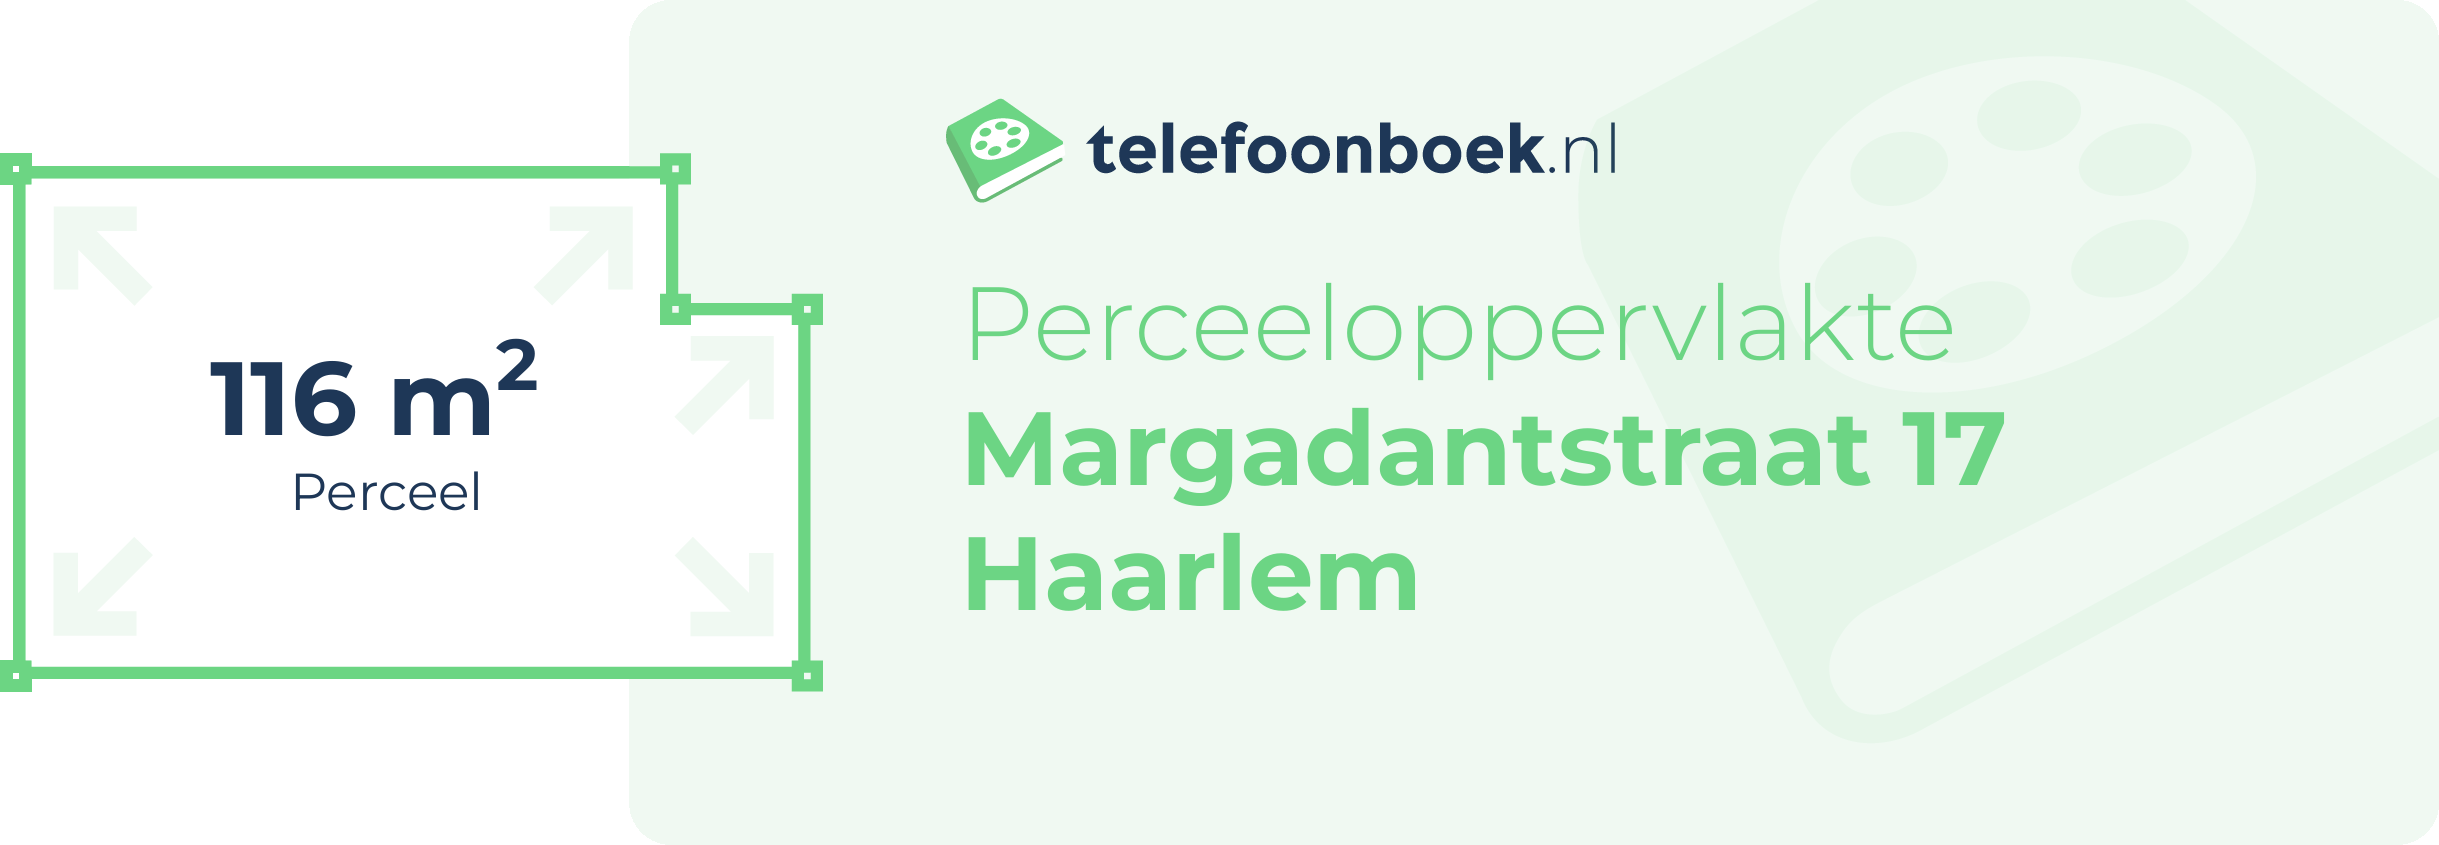 Perceeloppervlakte Margadantstraat 17 Haarlem